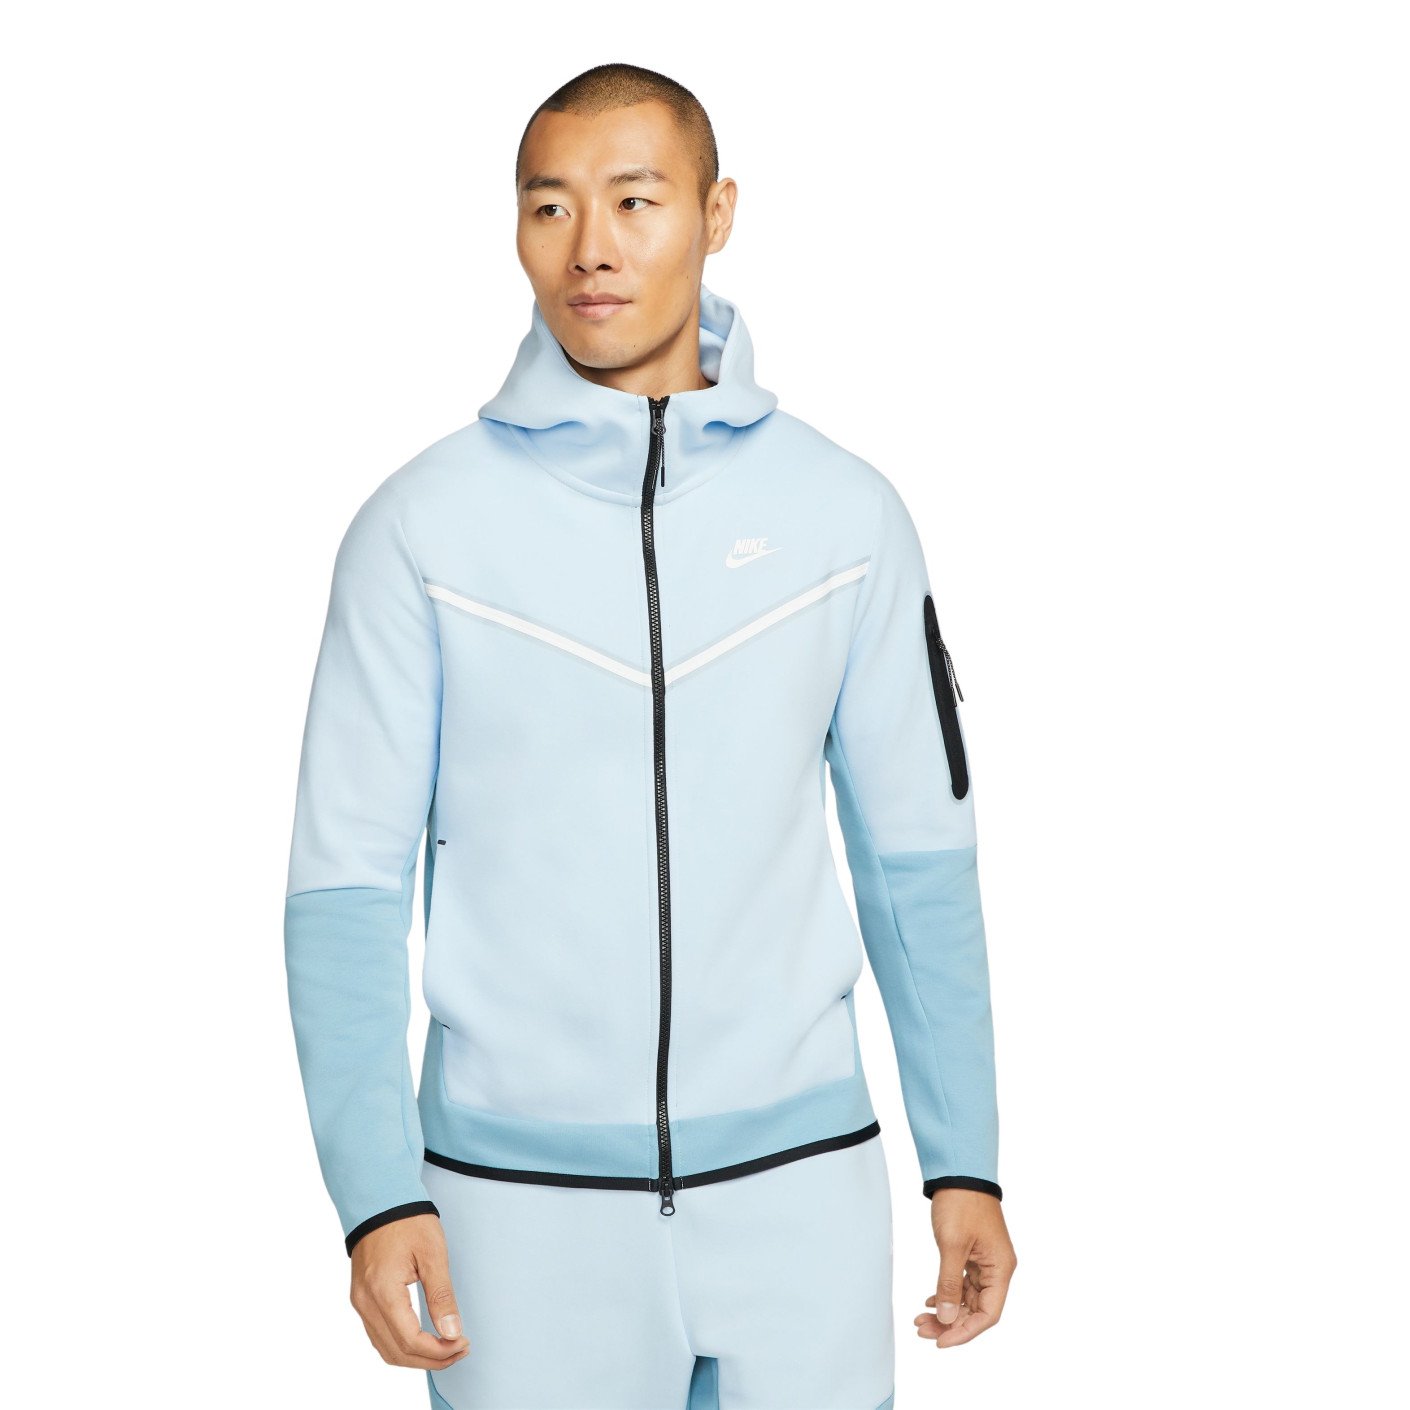 Nike Vest Light Blue -